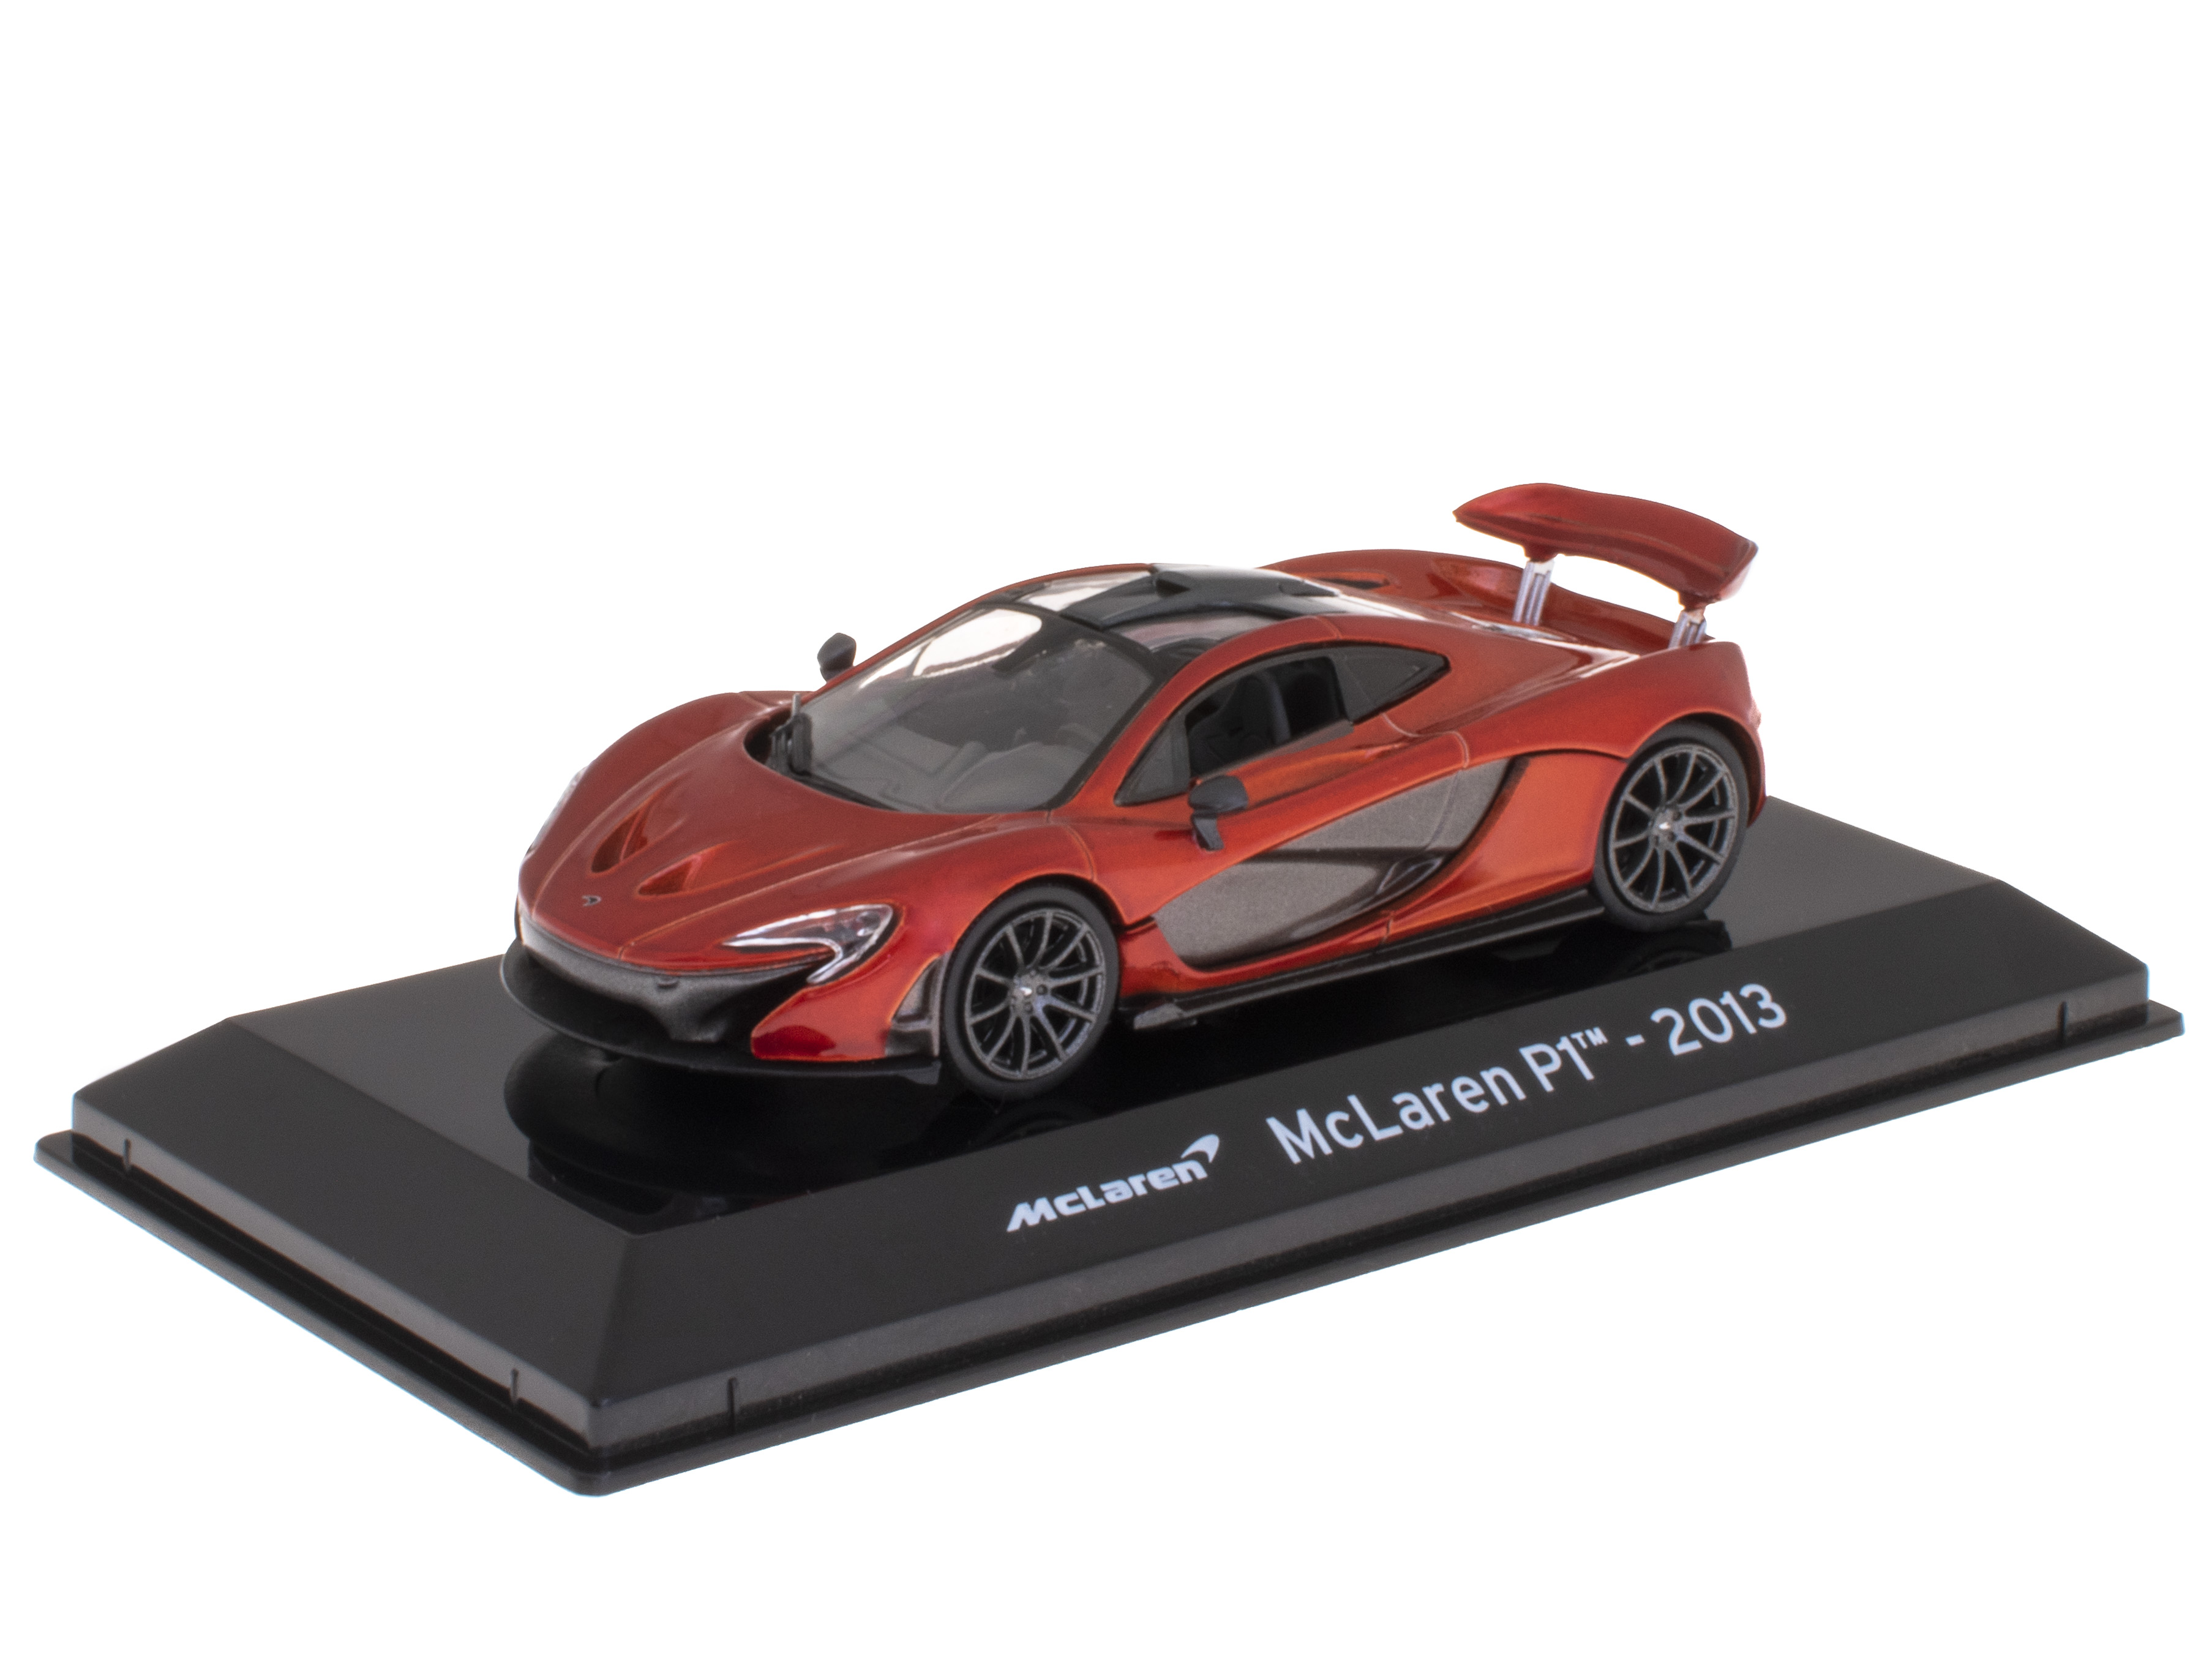 McLaren P1 - 2014